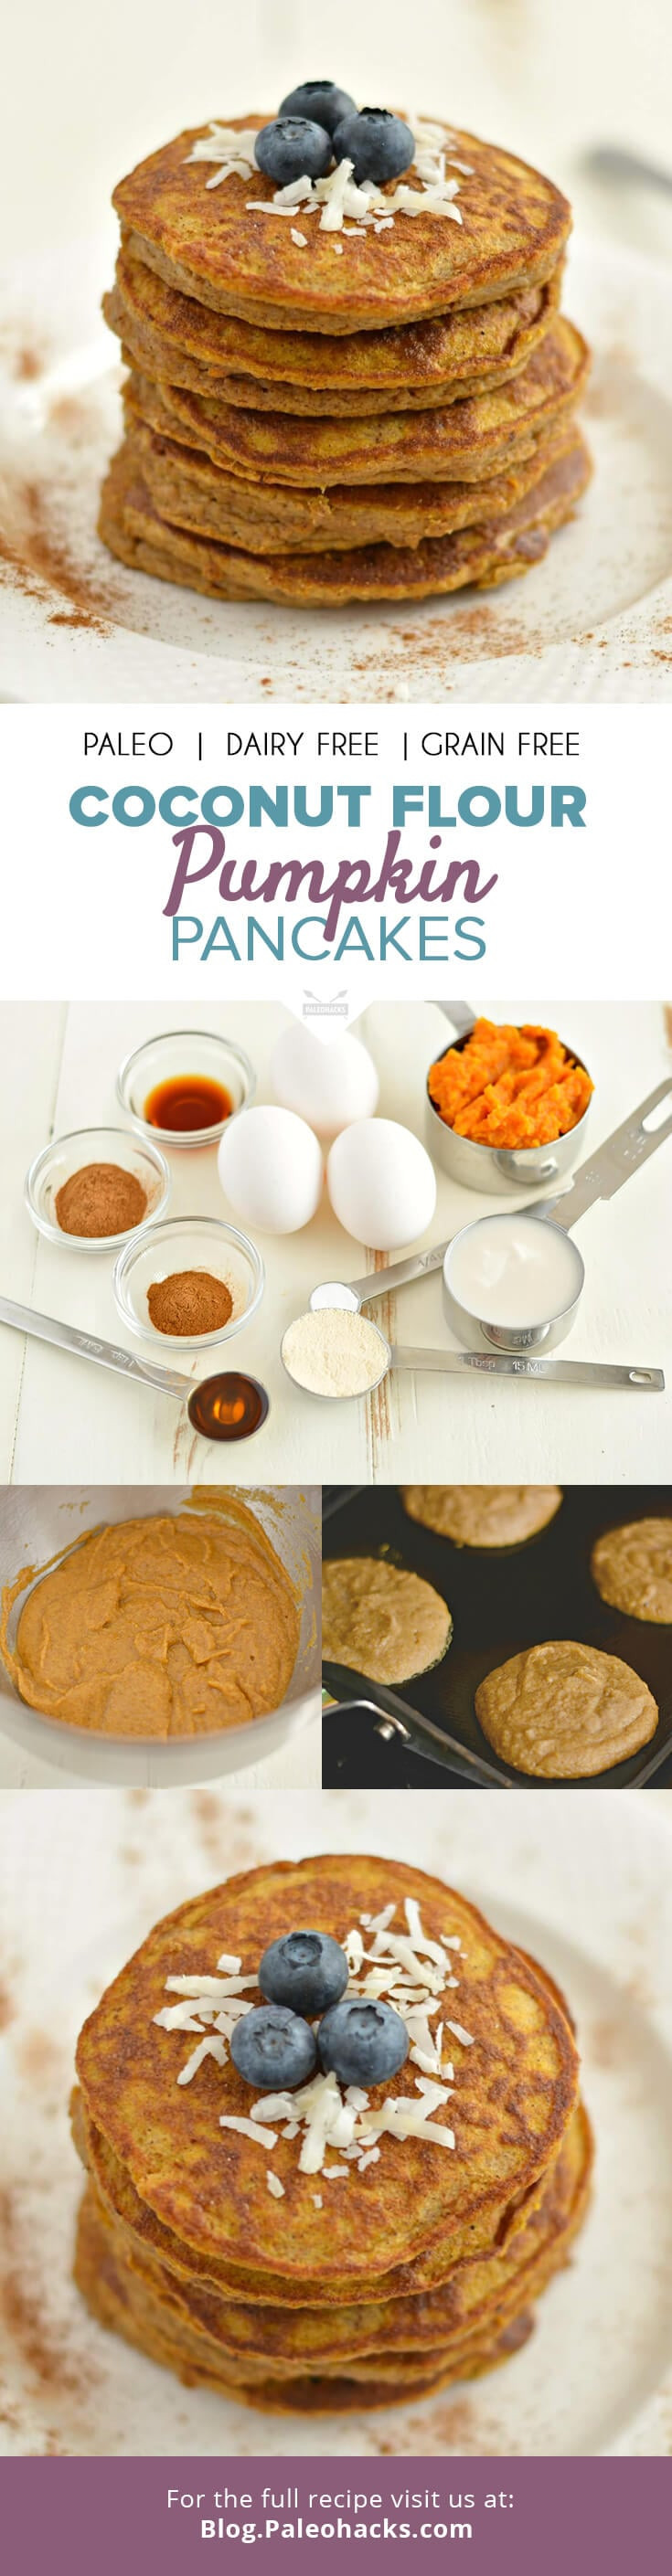 Paleo Pumpkin Recipes
 Paleo Pumpkin Pancakes Recipe